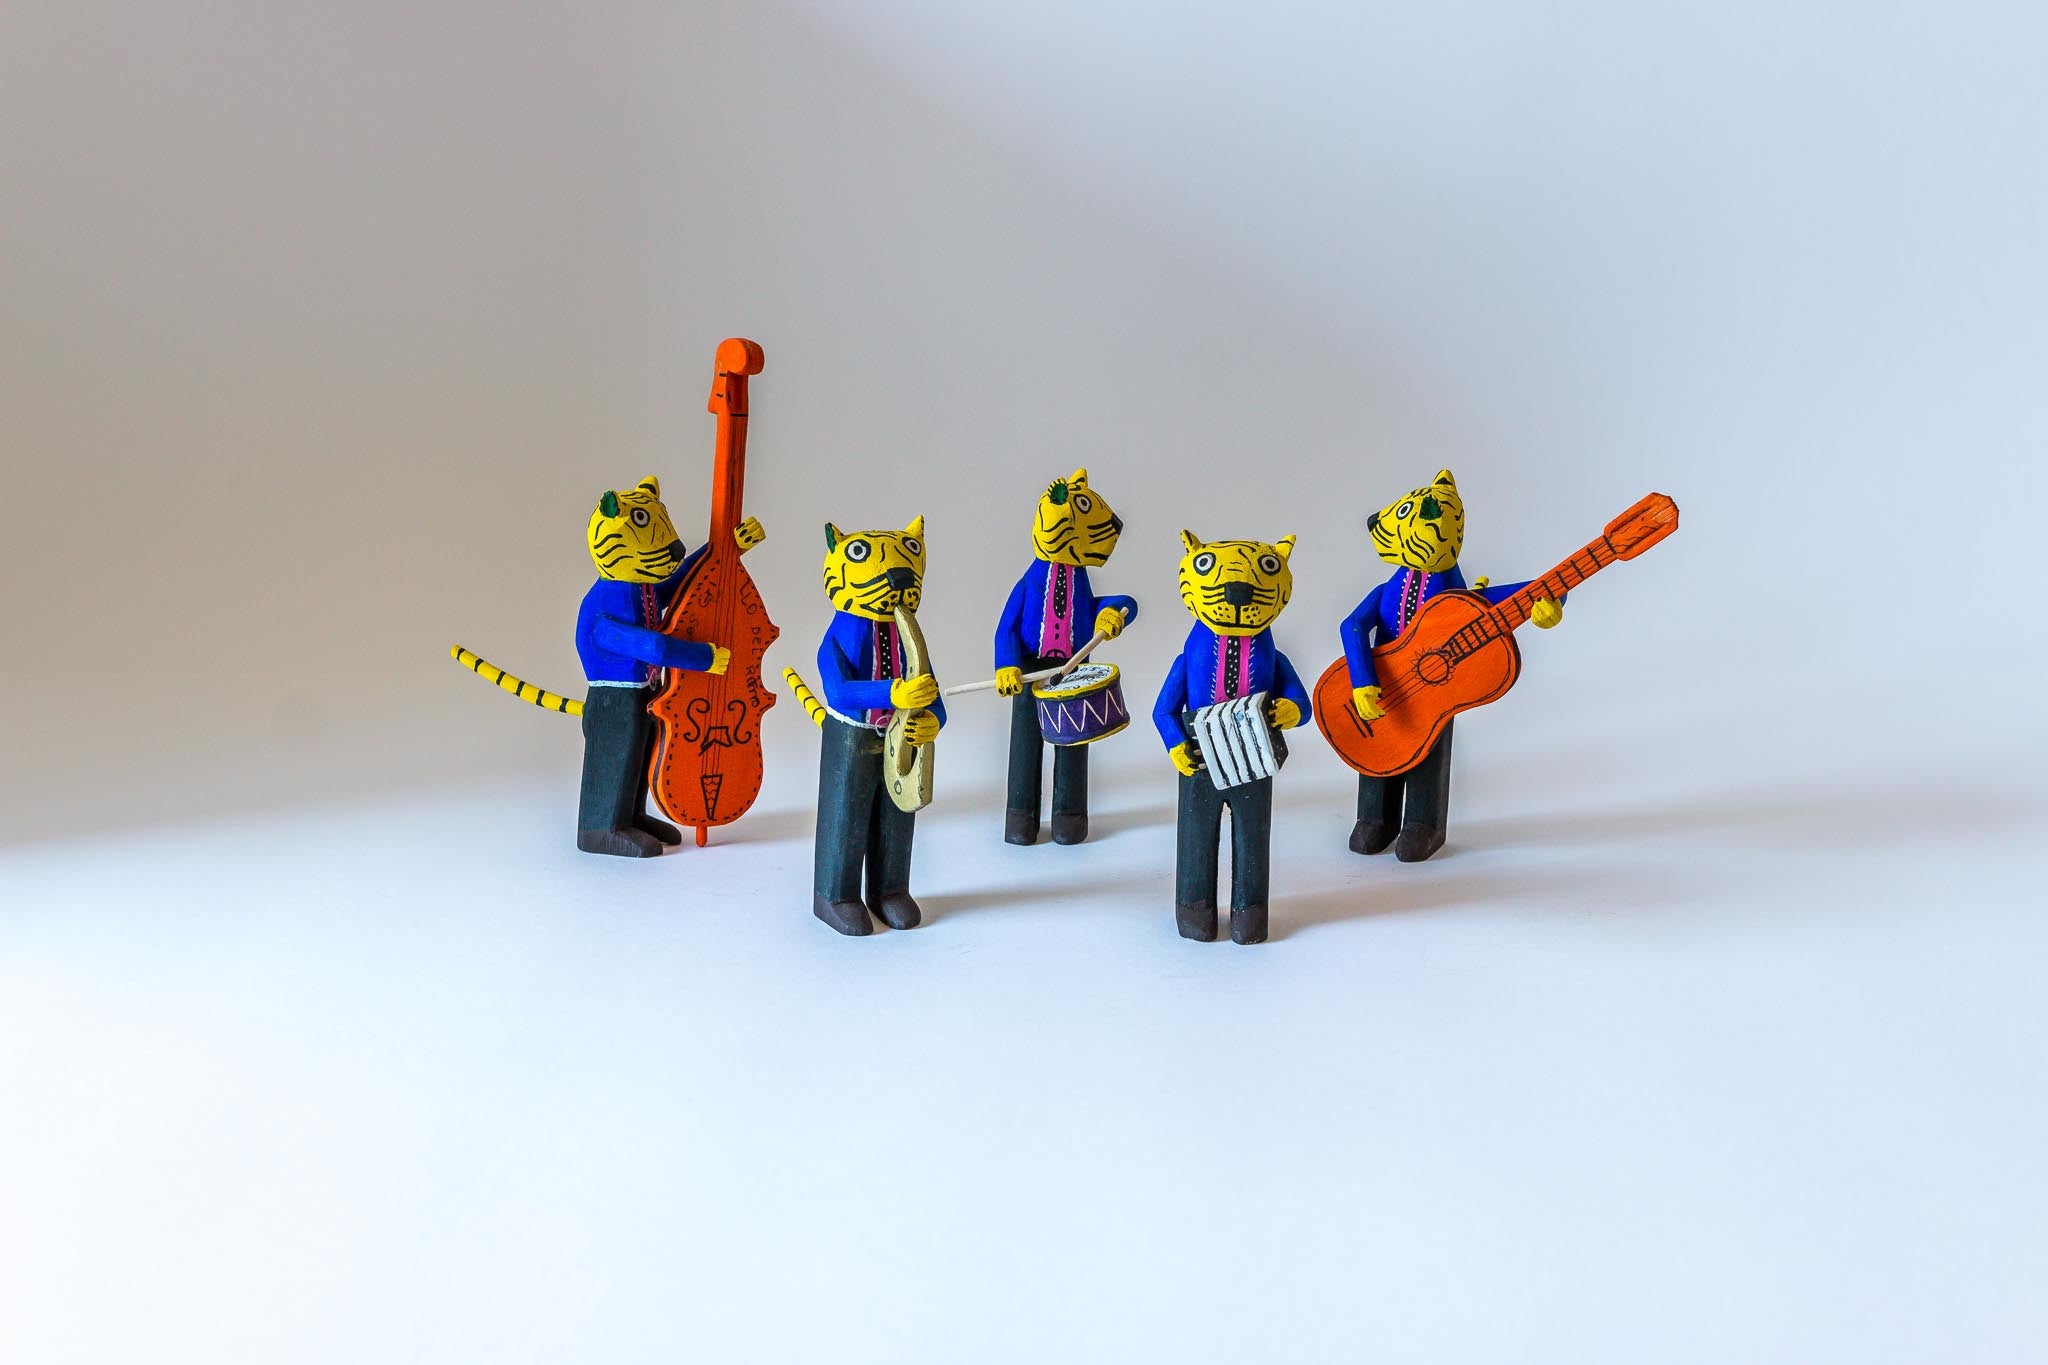 Five Musicians